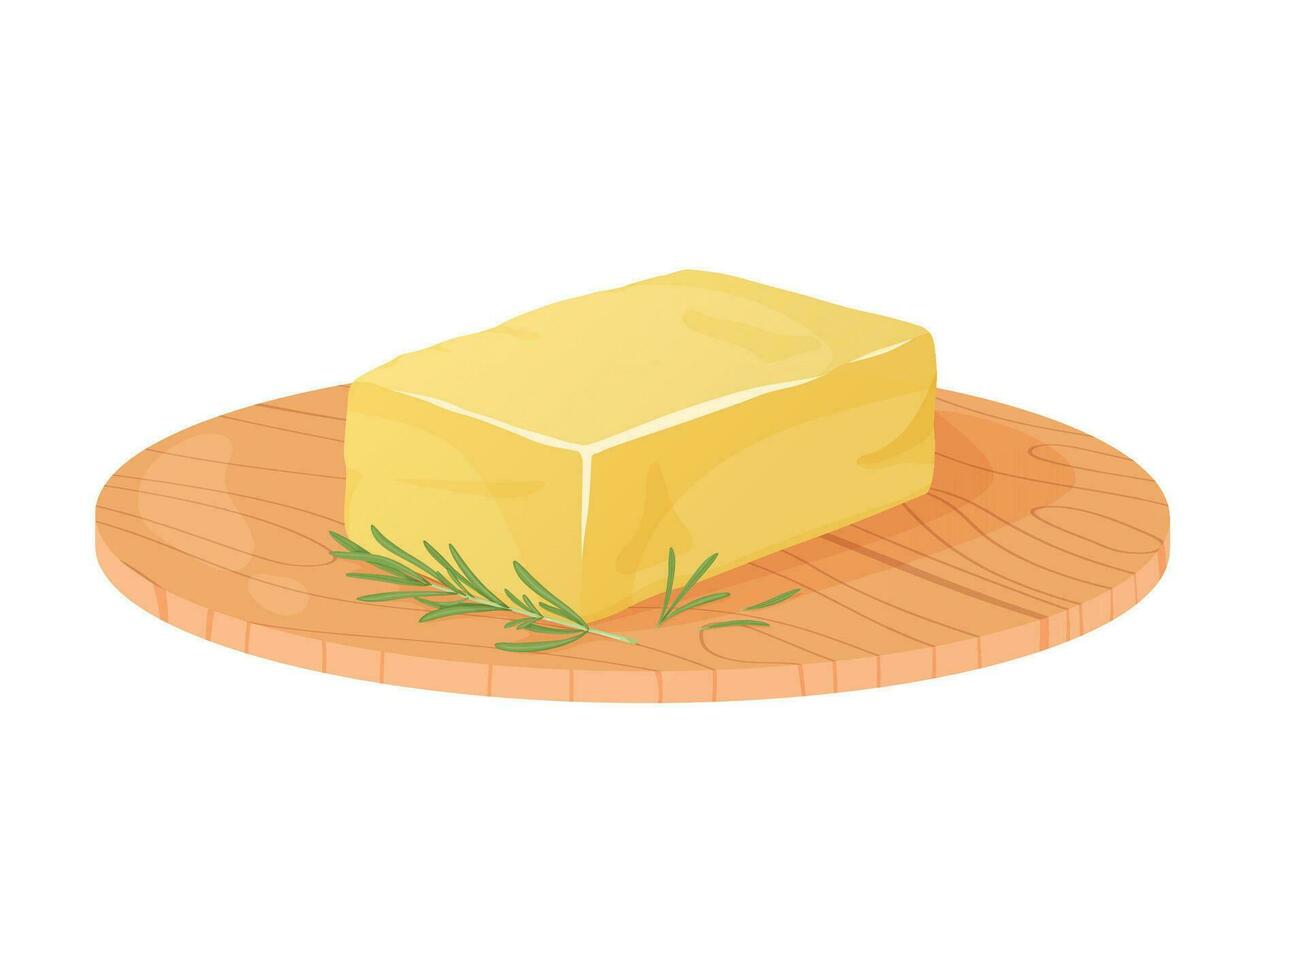 Brick of butter. Margarine or milk butter blocks. Dairy breakfast food. vector